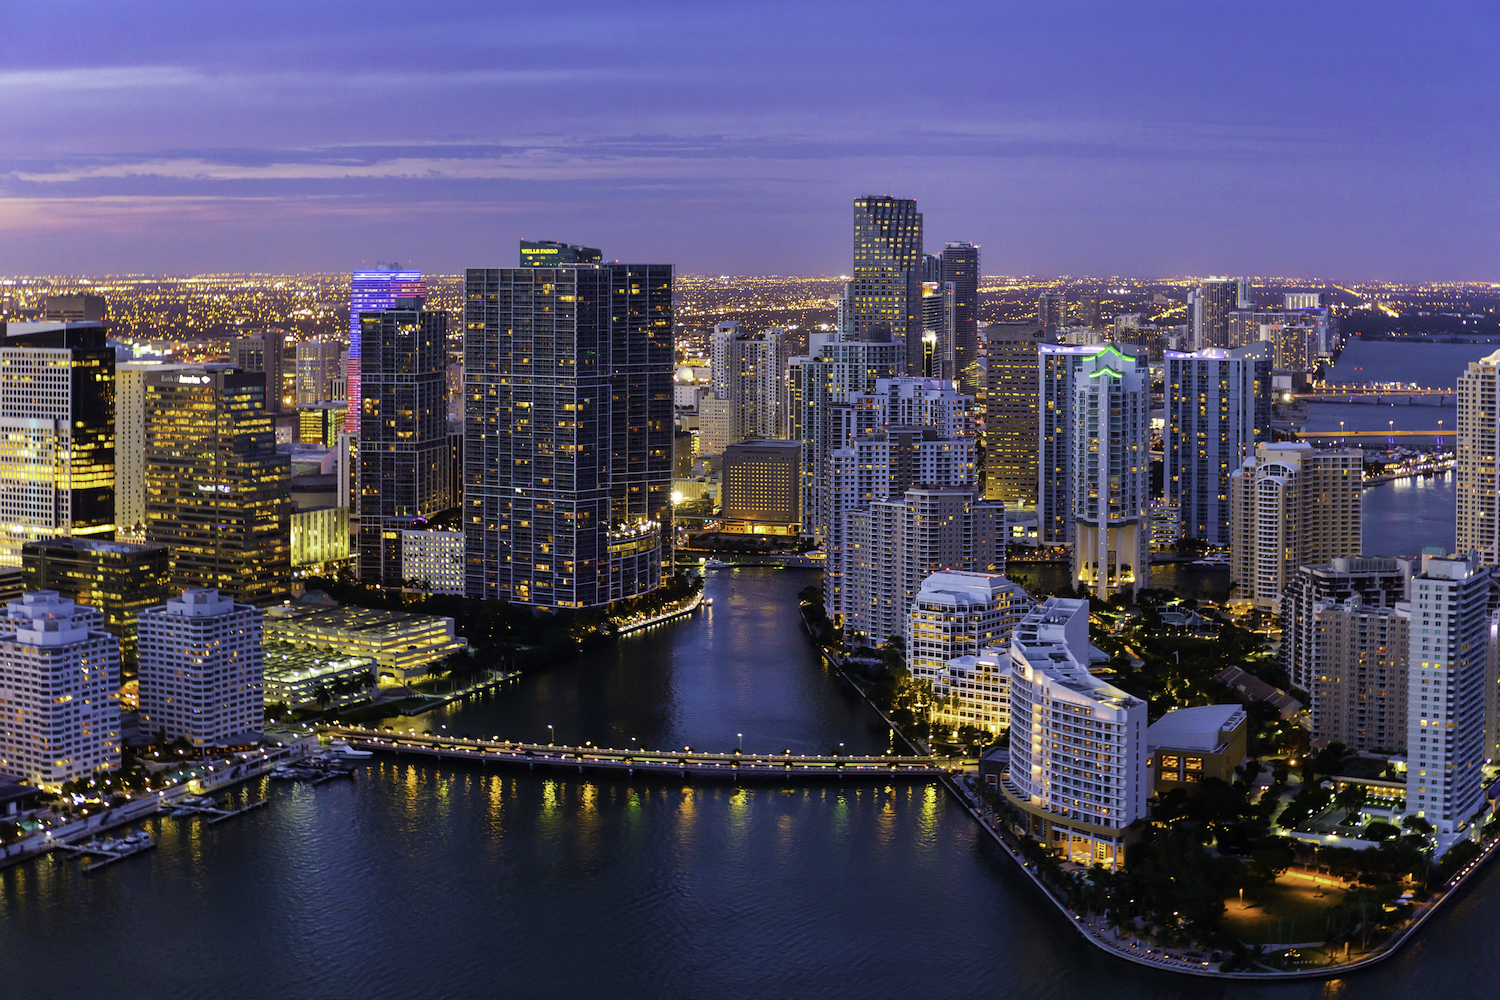 Evening Aerial View of Miami, Florida